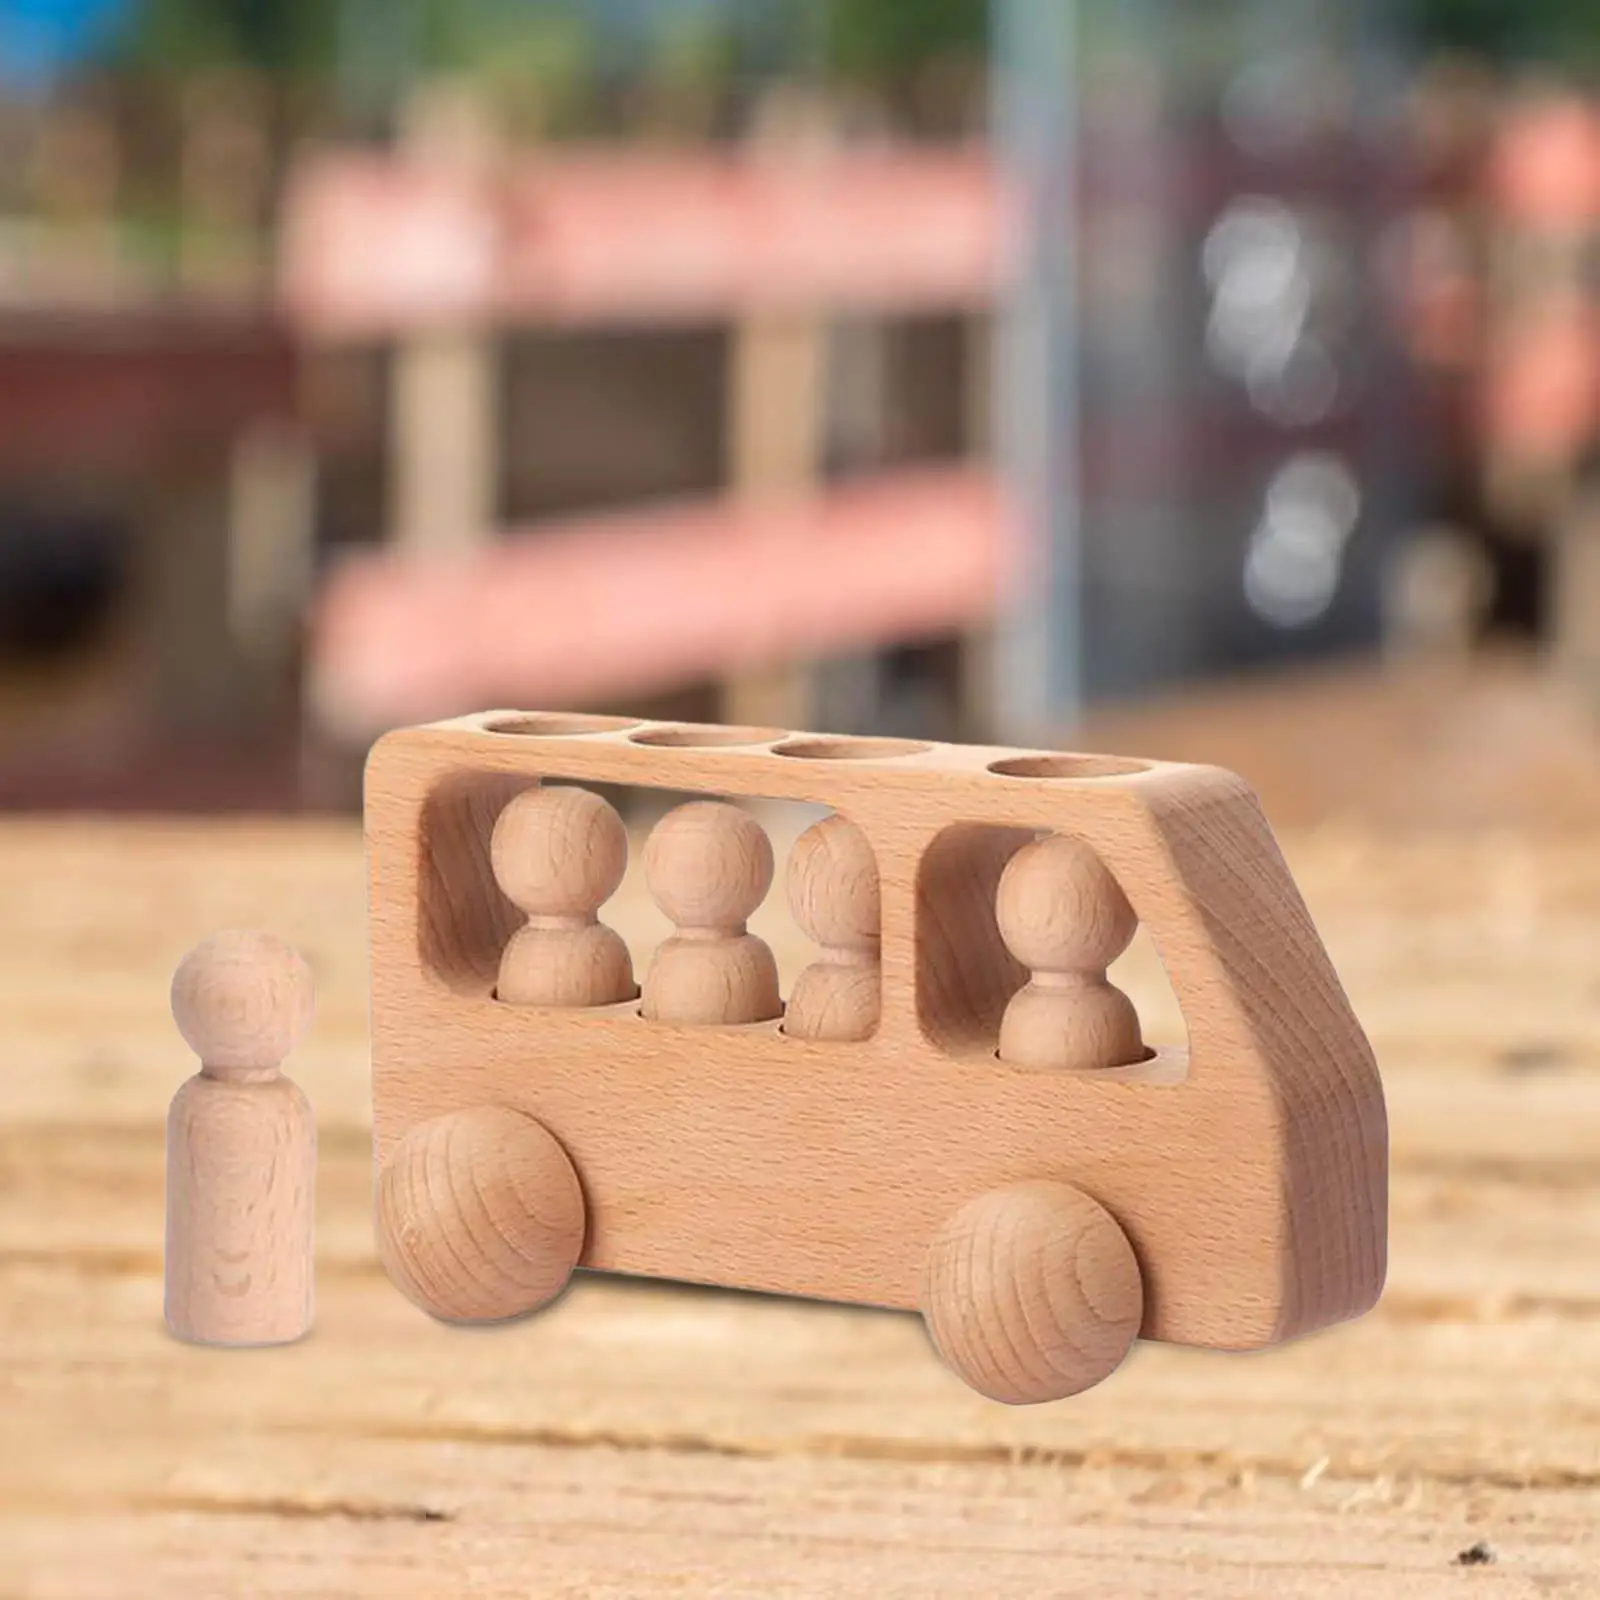 Wooden Bus Toy Preschool Learning Activities Car Blocks for Preschool